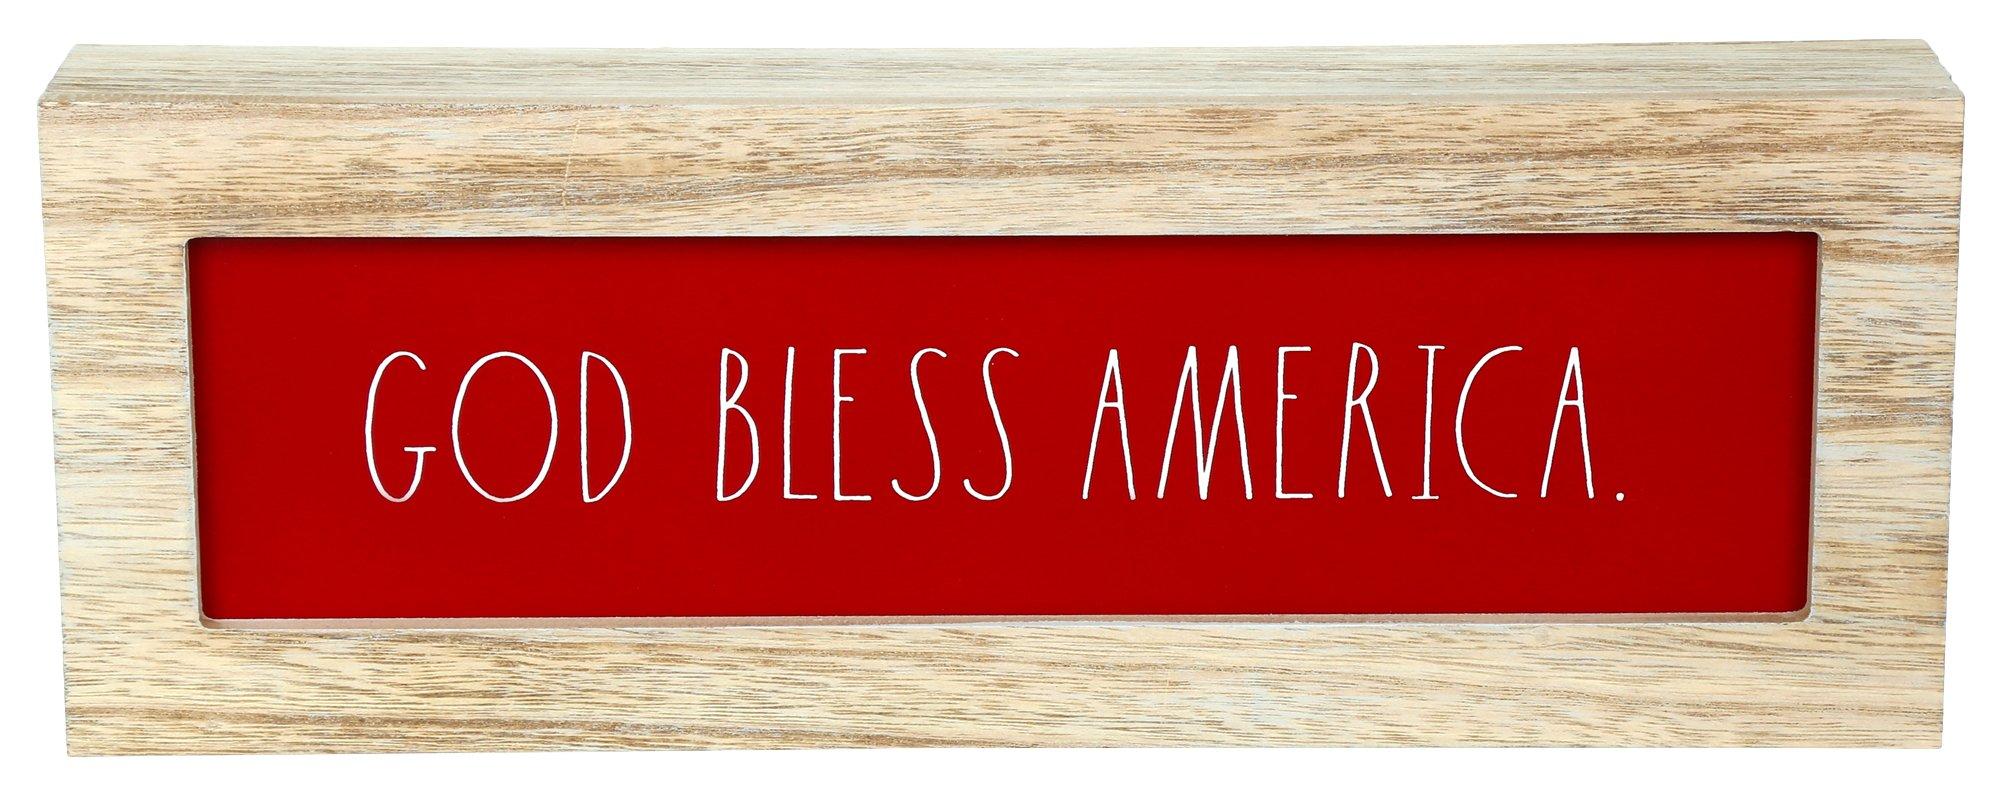 14x5 Americana God Bless America Wood Block